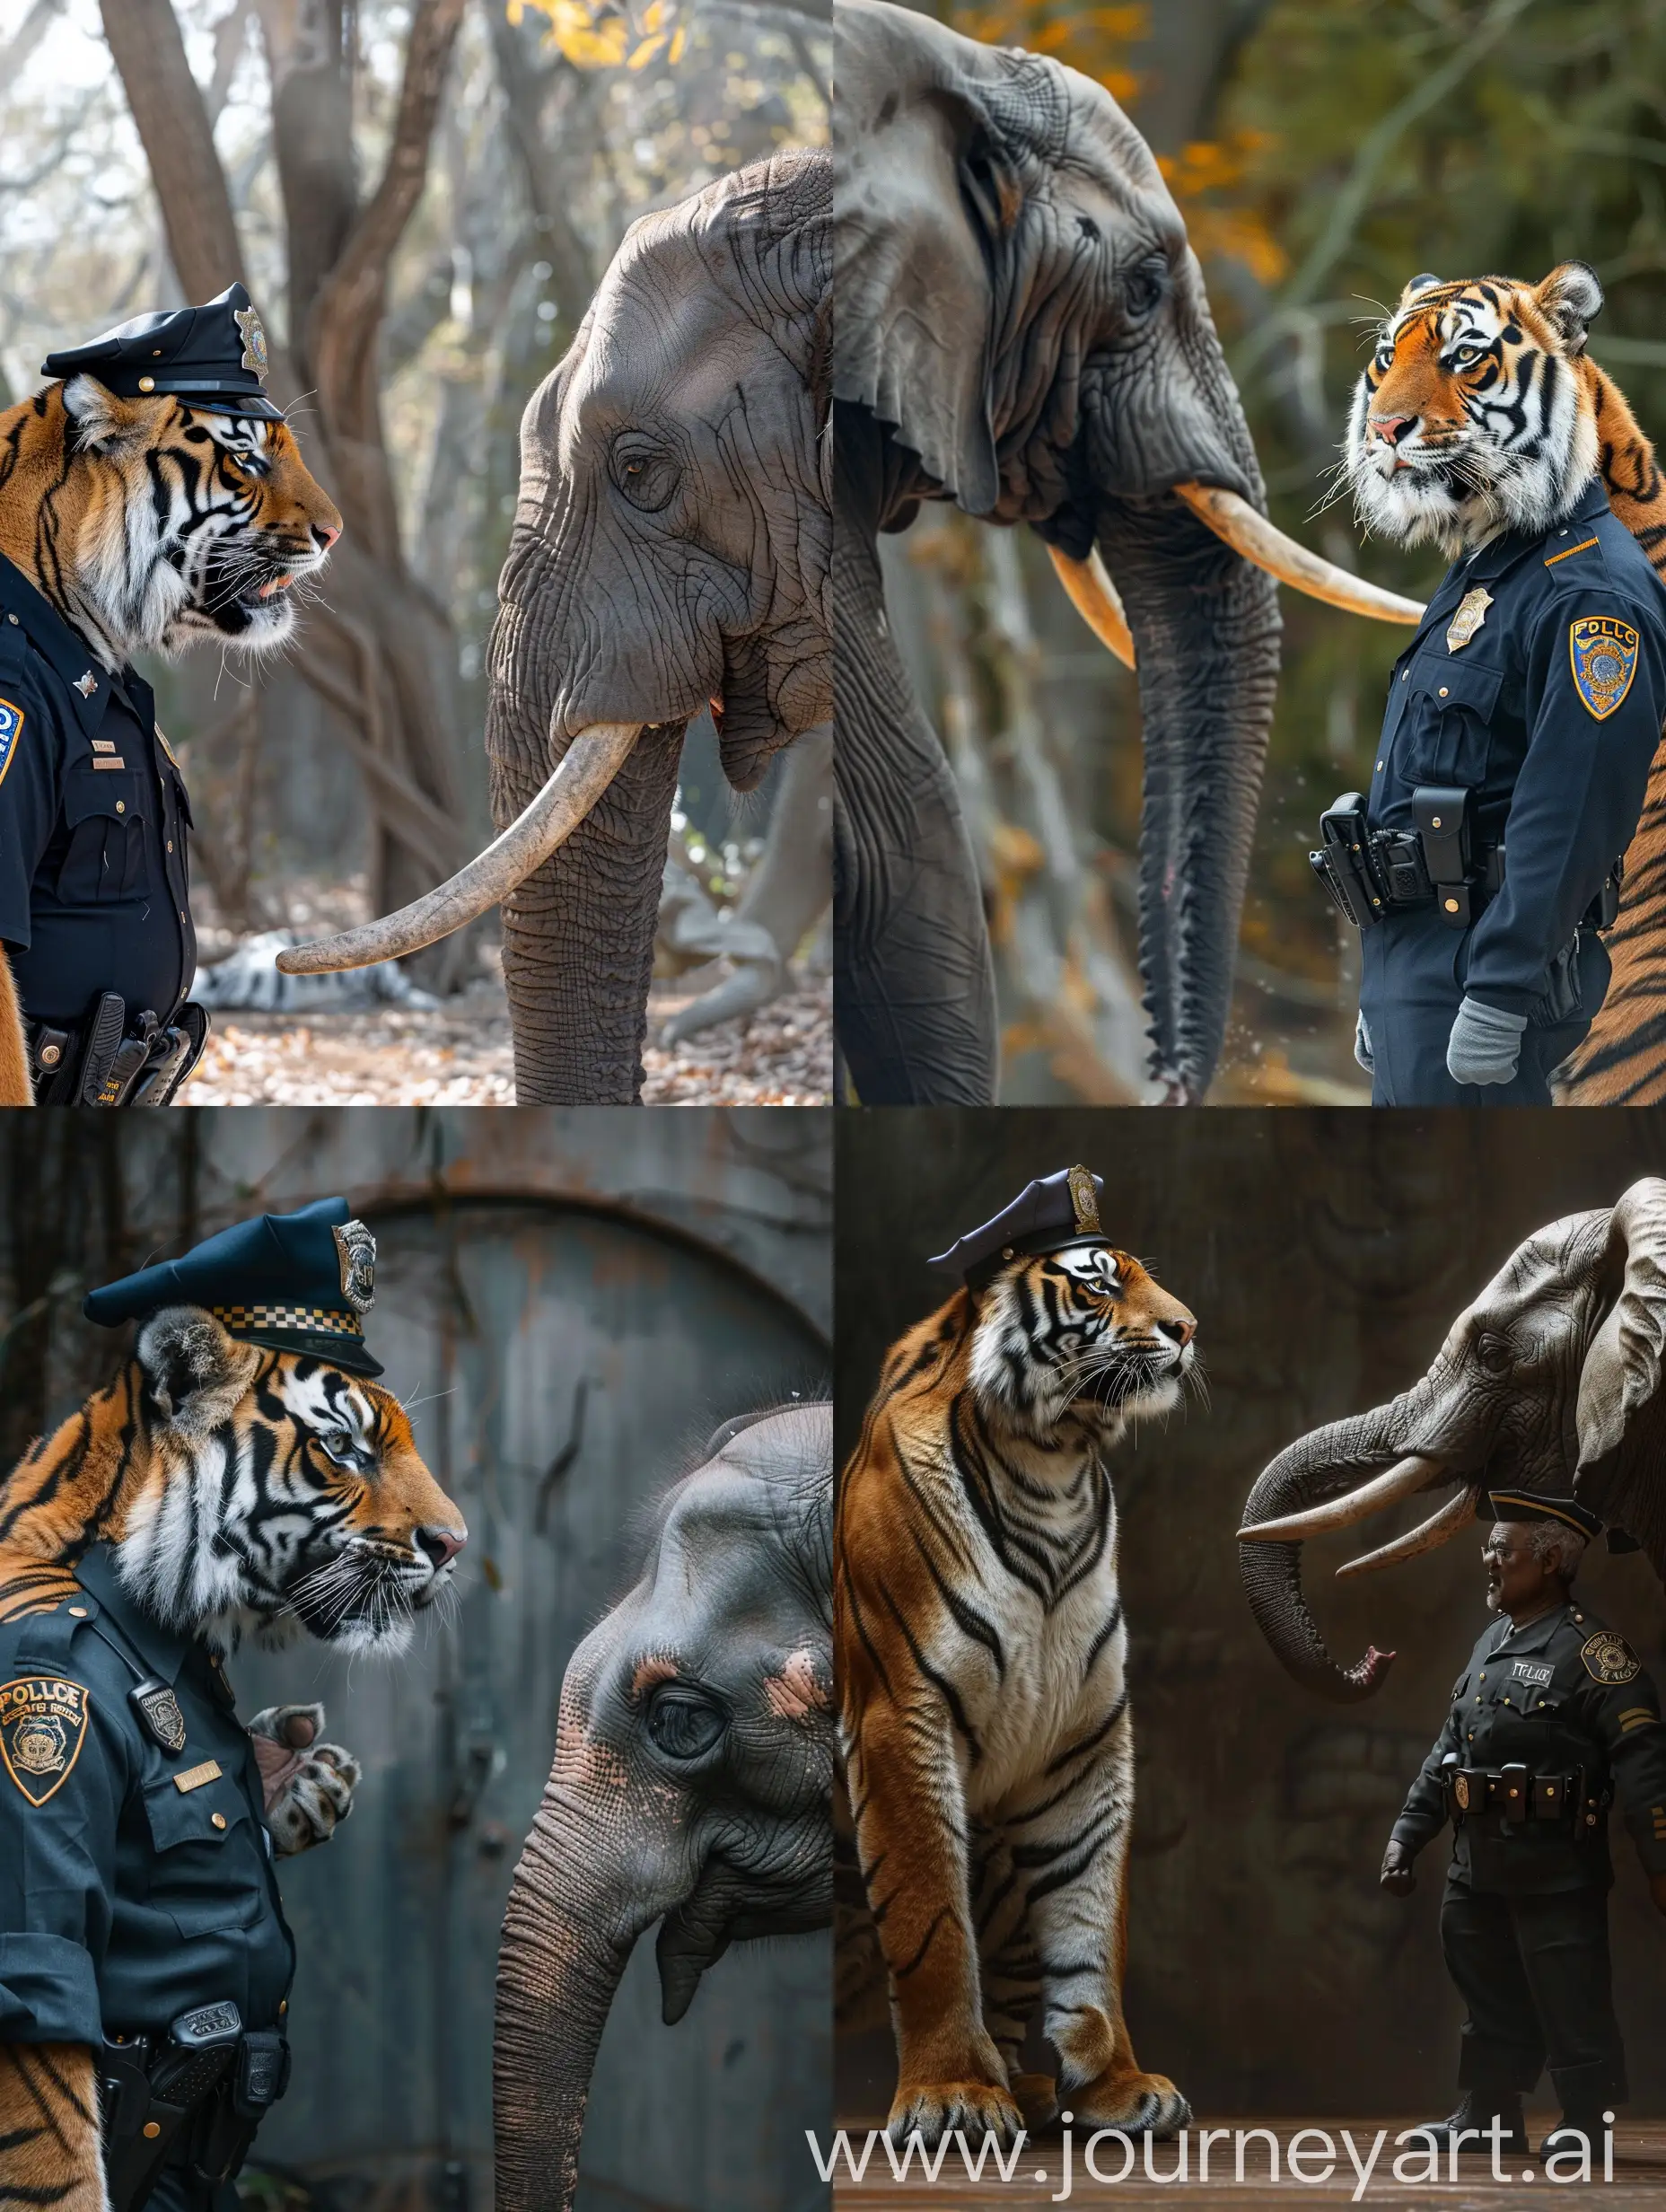 Wildlife-Police-Dialogue-Tiger-and-Elephant-Encounter